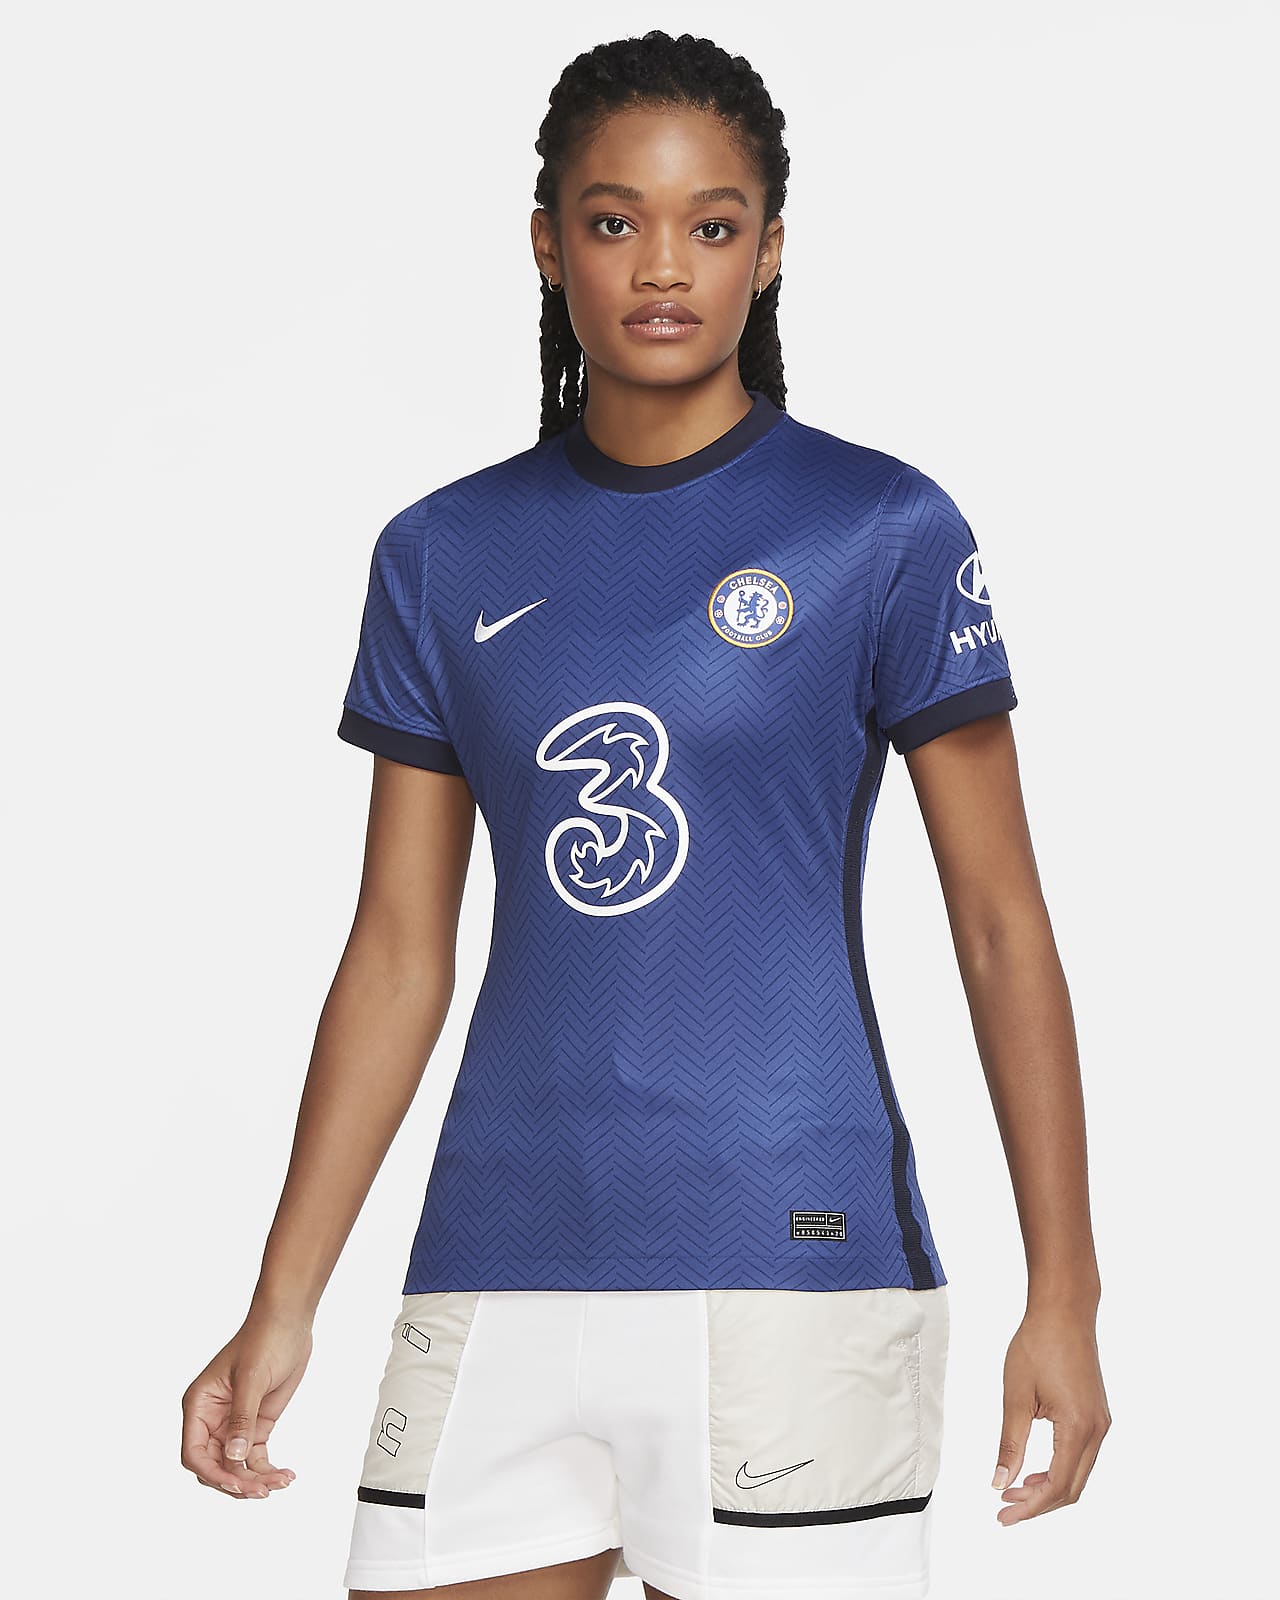 Chelsea F.C. 2020/21 Stadium Home Women's Football Shirt. Nike SG